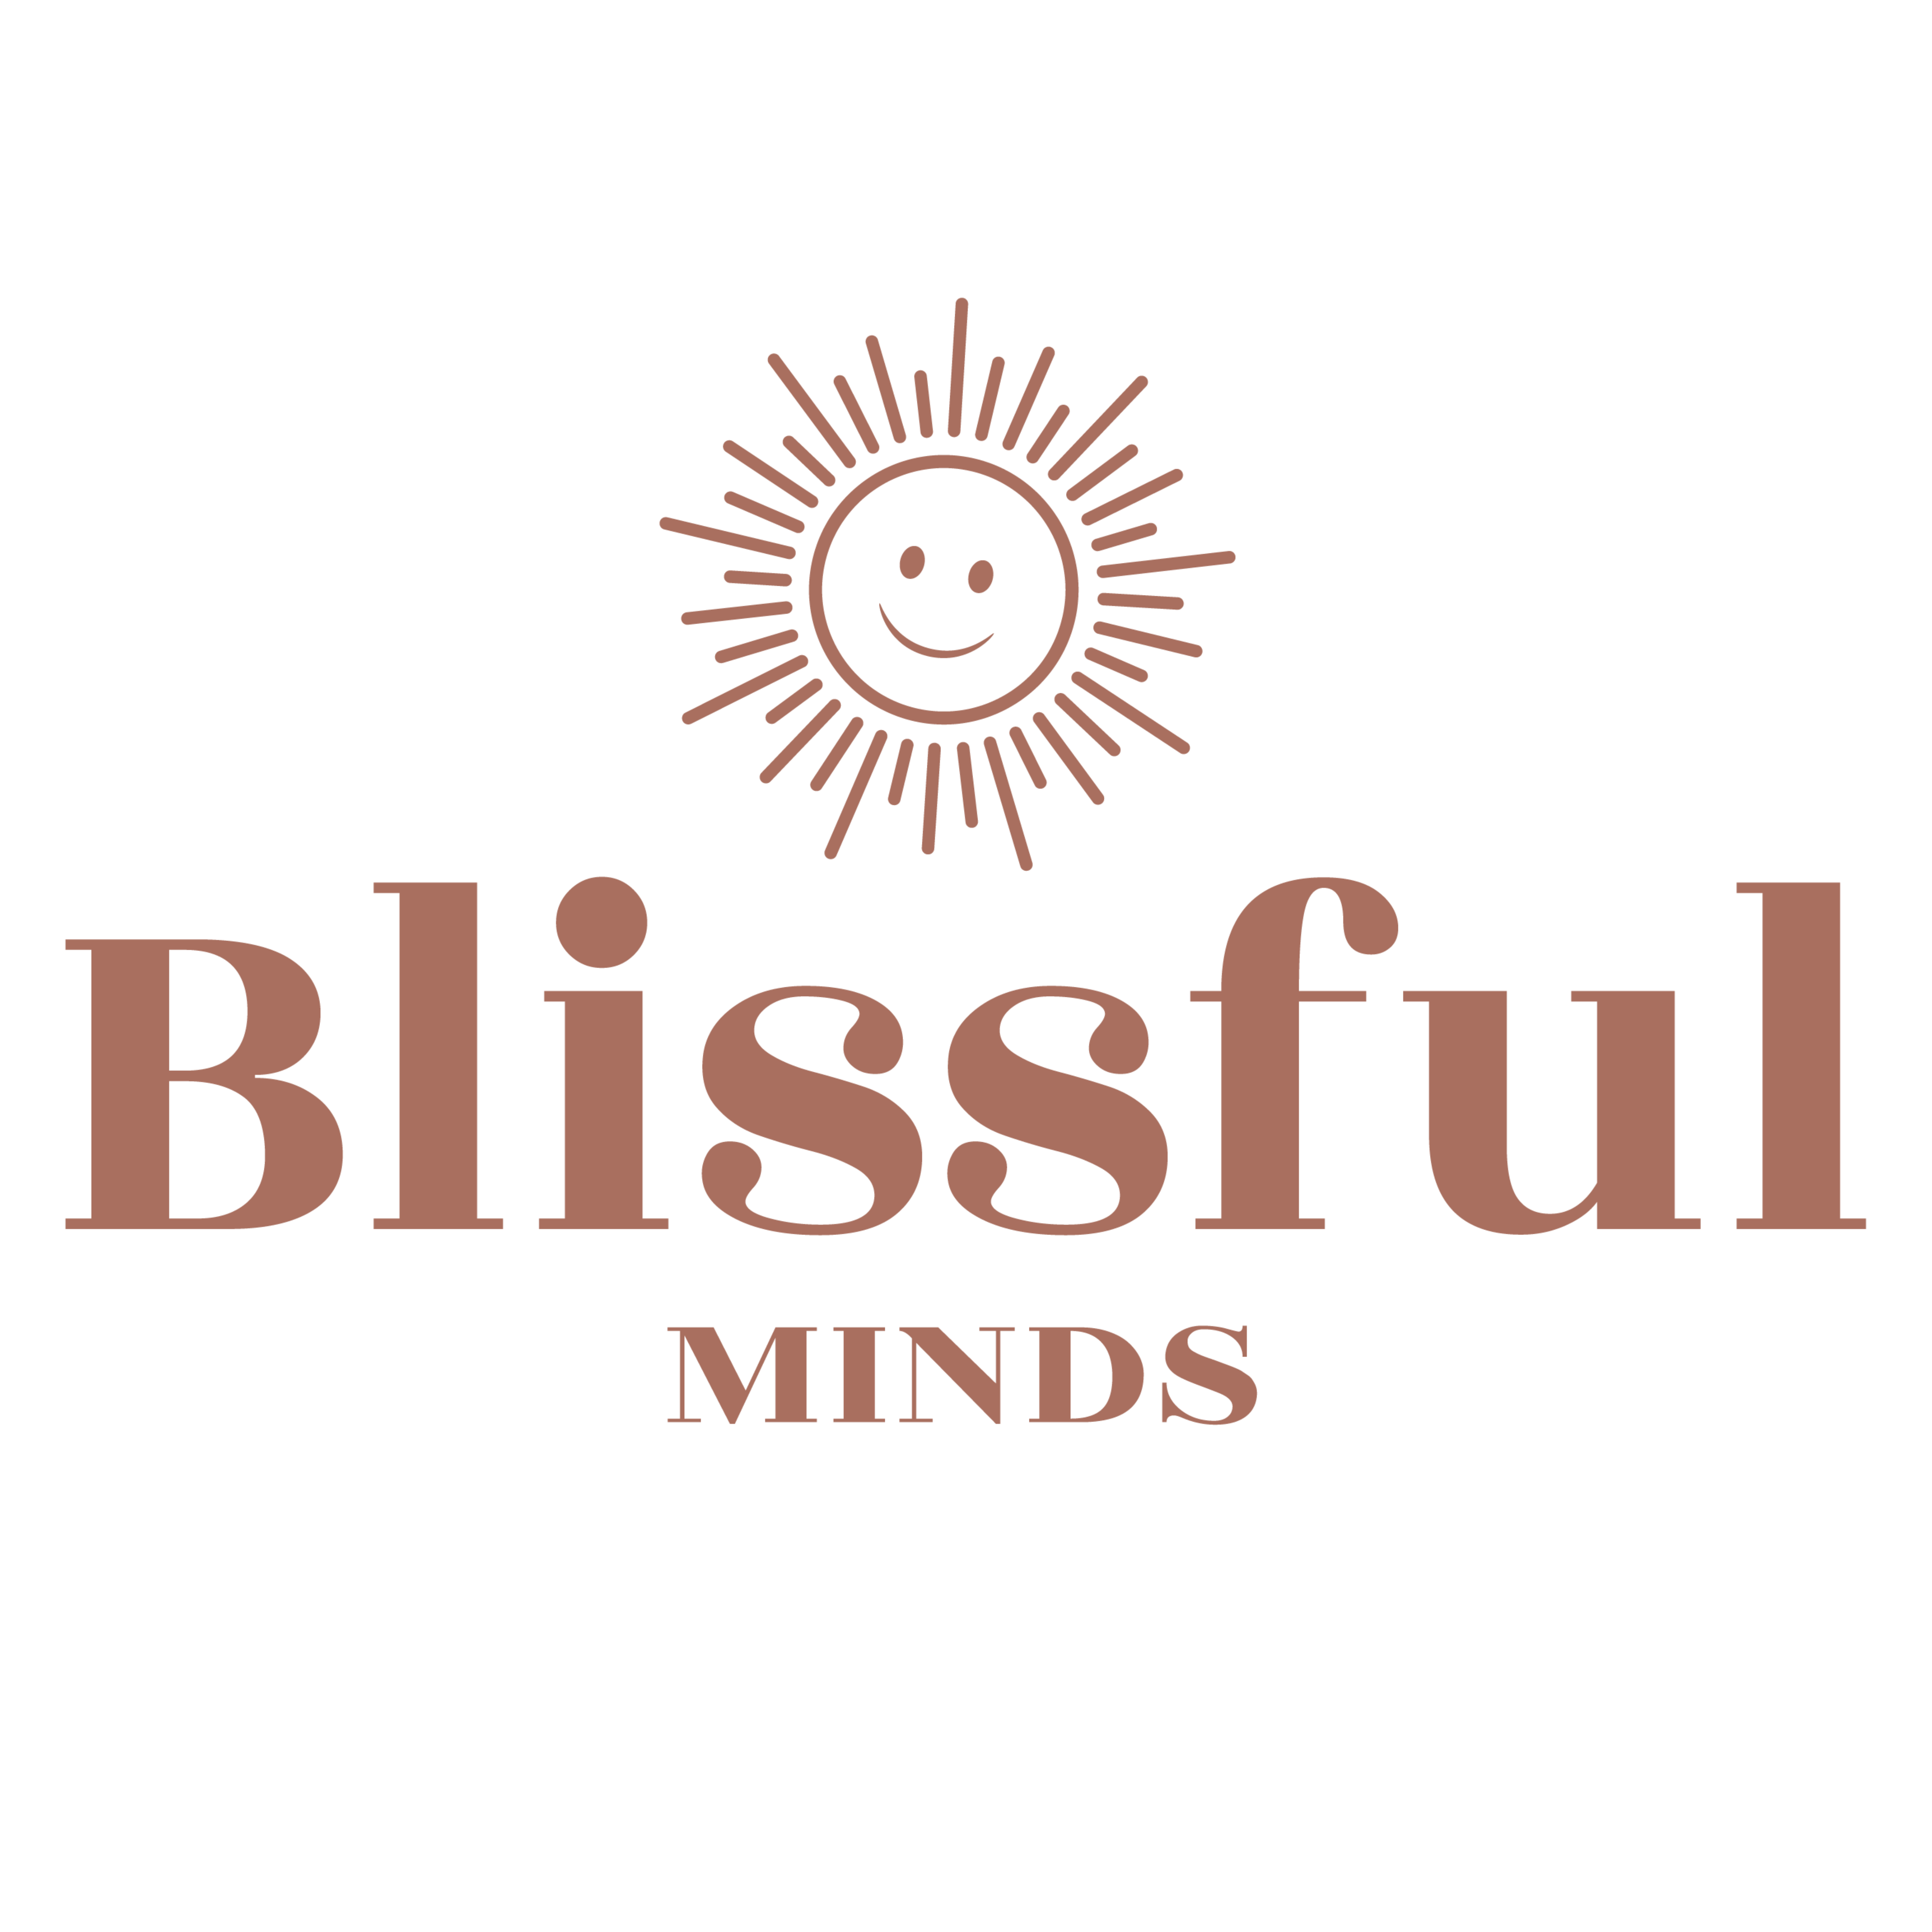 Blissful Minds